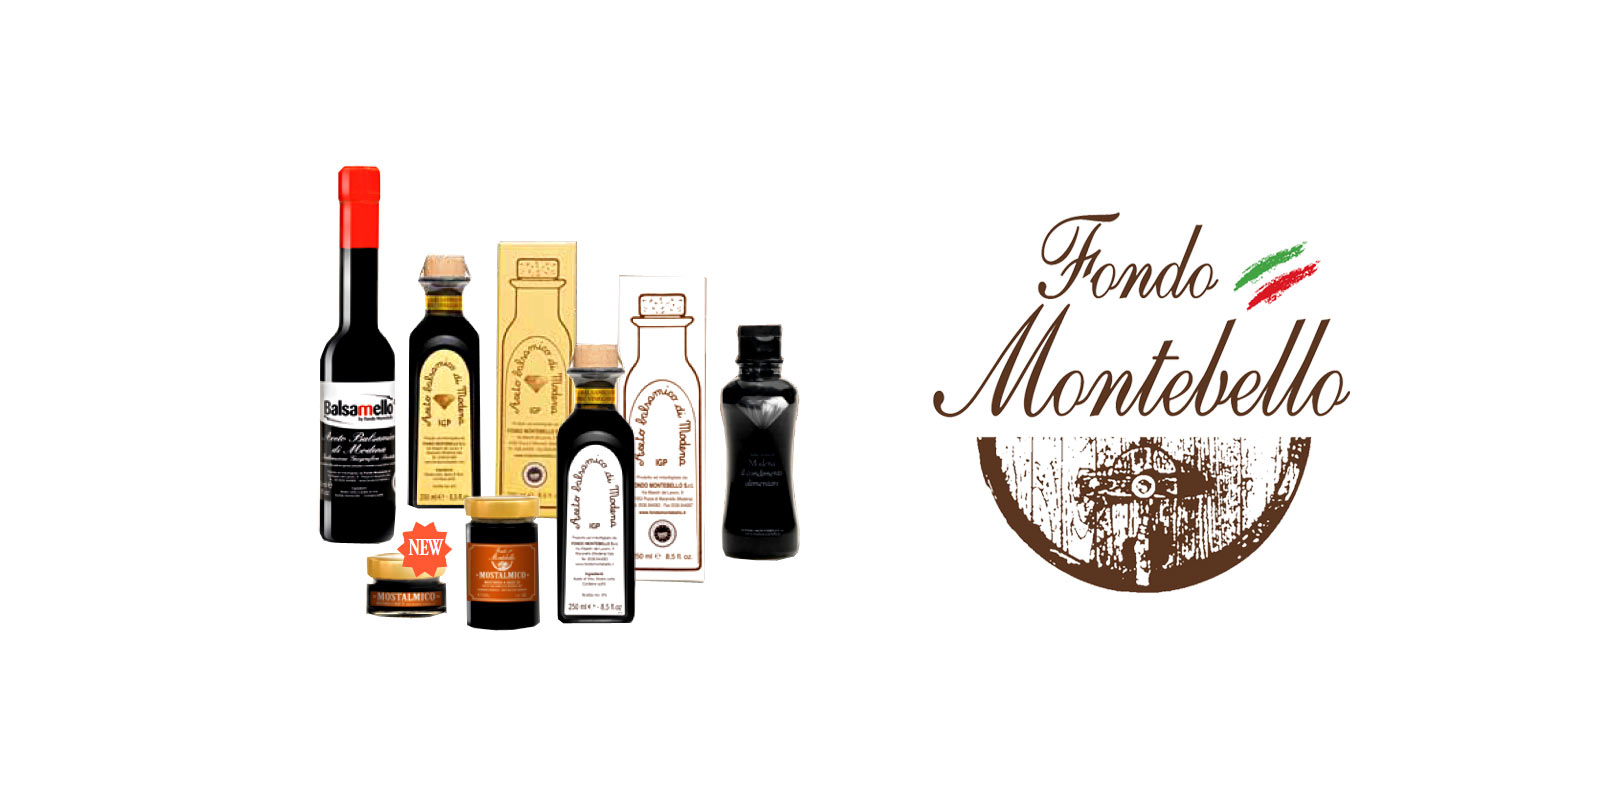 Aceto Balsamico Fondo Montebello Fondo Montebello utilitza metodes de produccio antics i tradicionals per produir un excel·lent vinagre balsamic de la regio de Maranello a Italia.